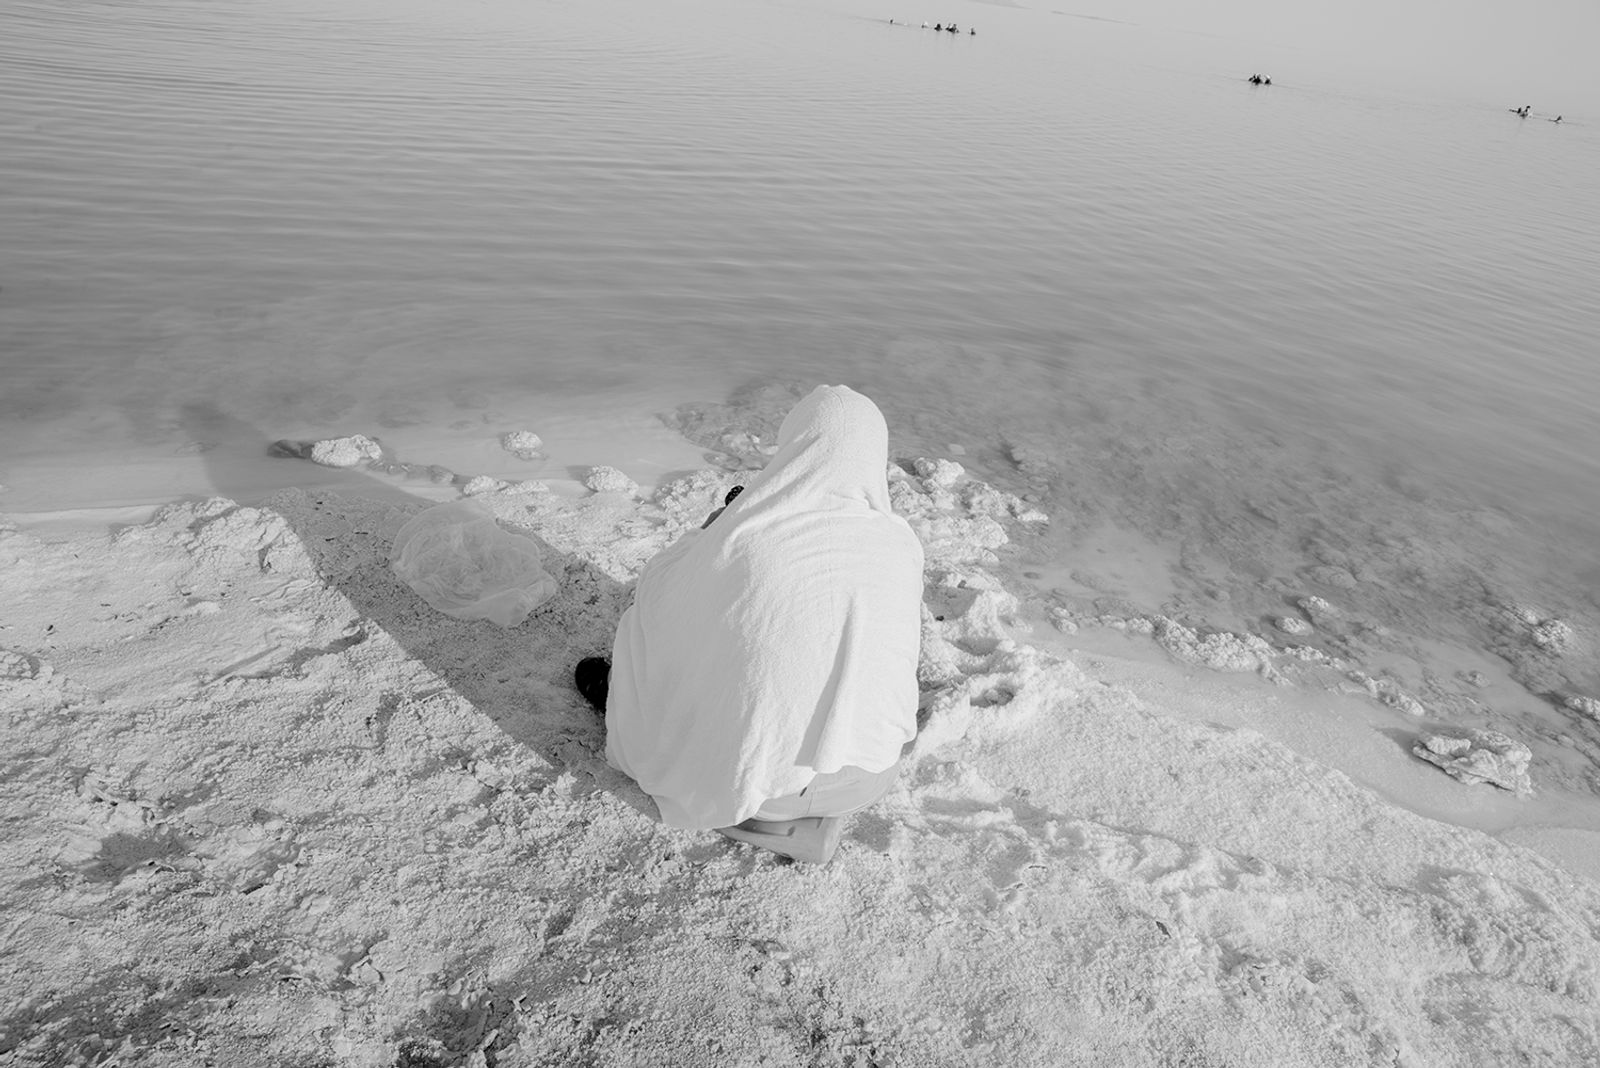 © Salman Sam daliri - Image from the White like death photography project